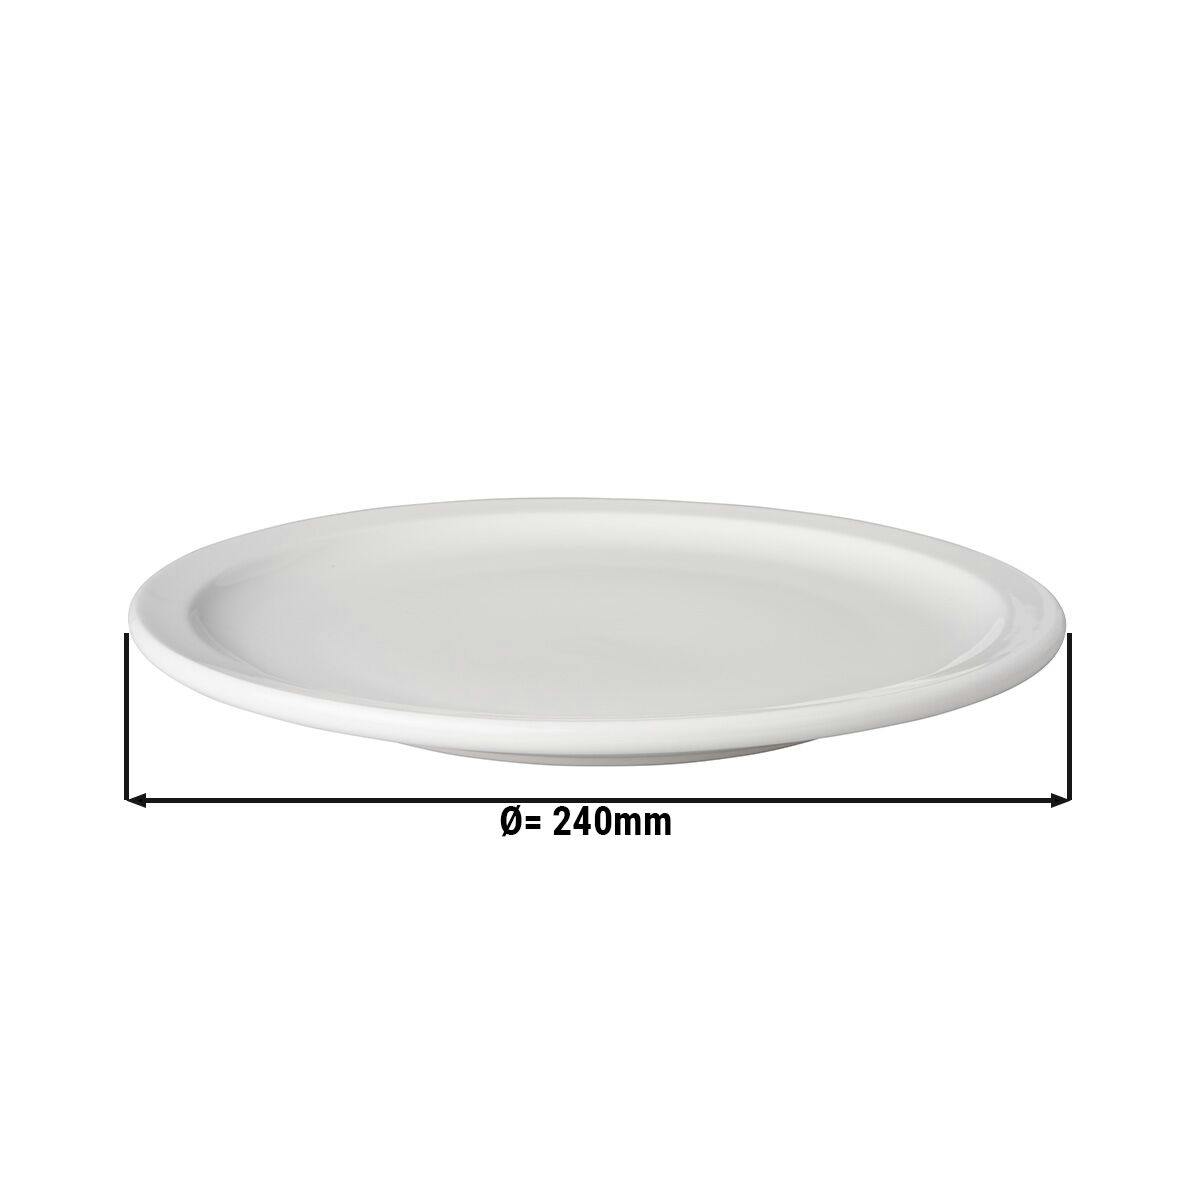 (6 pieces) BUDGETLINE - Flat plate Mammoet - Ø 24 cm - White